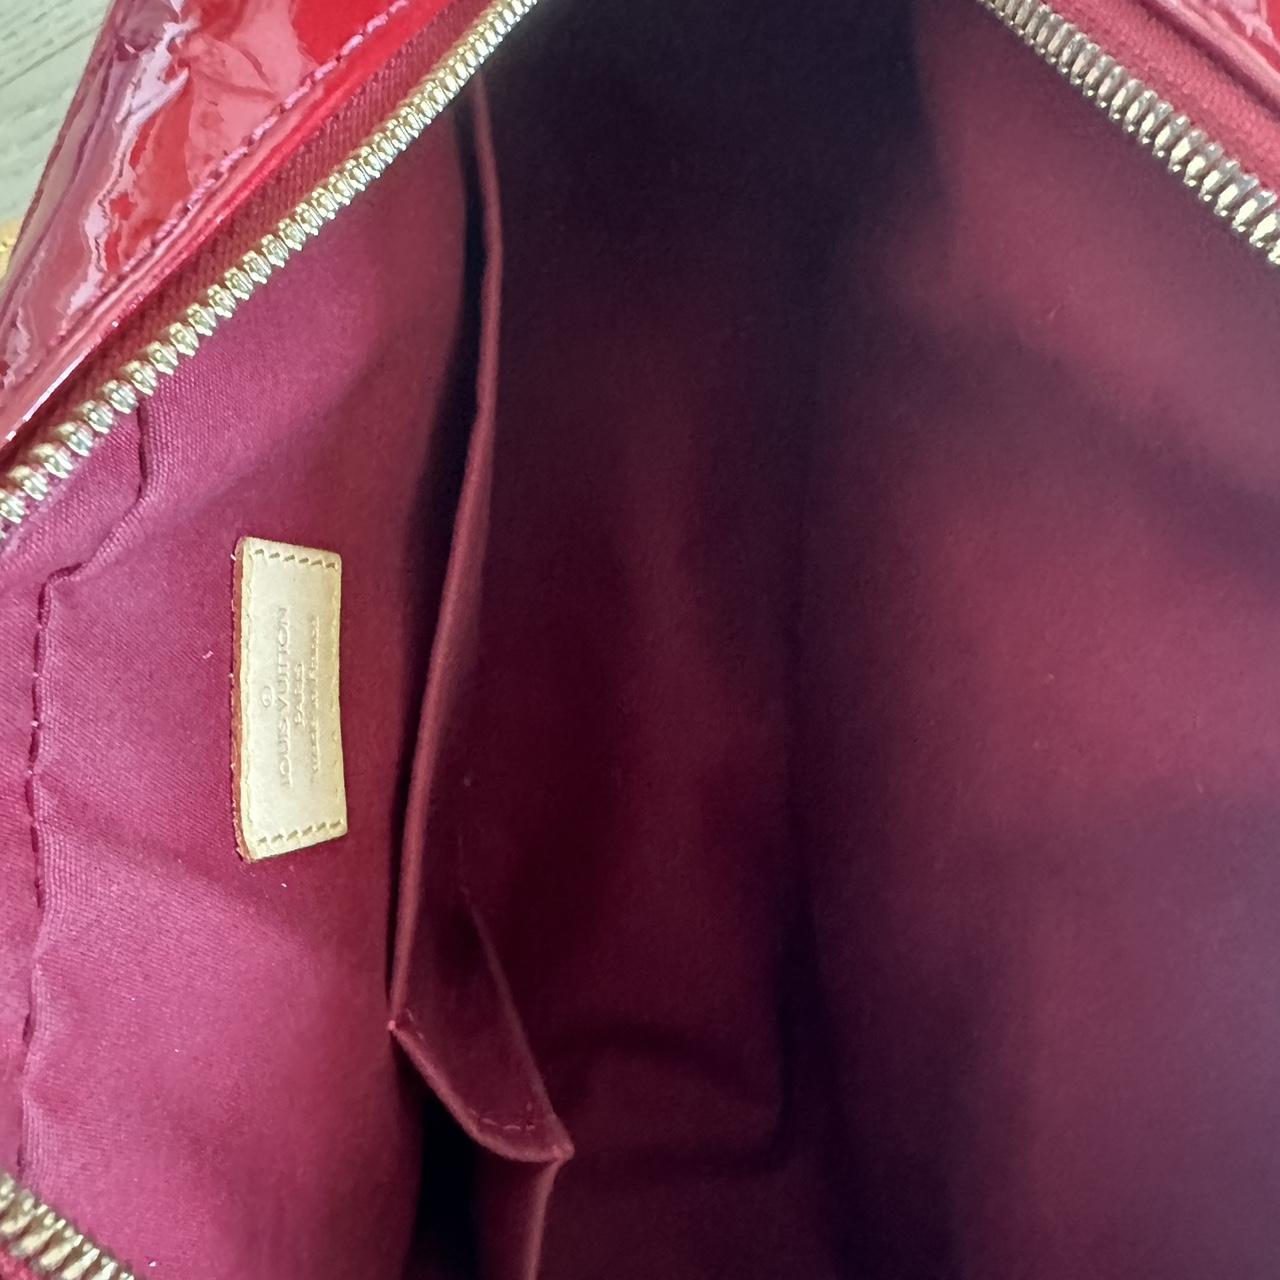 LV RED BAG RED SHOULDER/CLUTCH/CHAIN BAG super cute - Depop